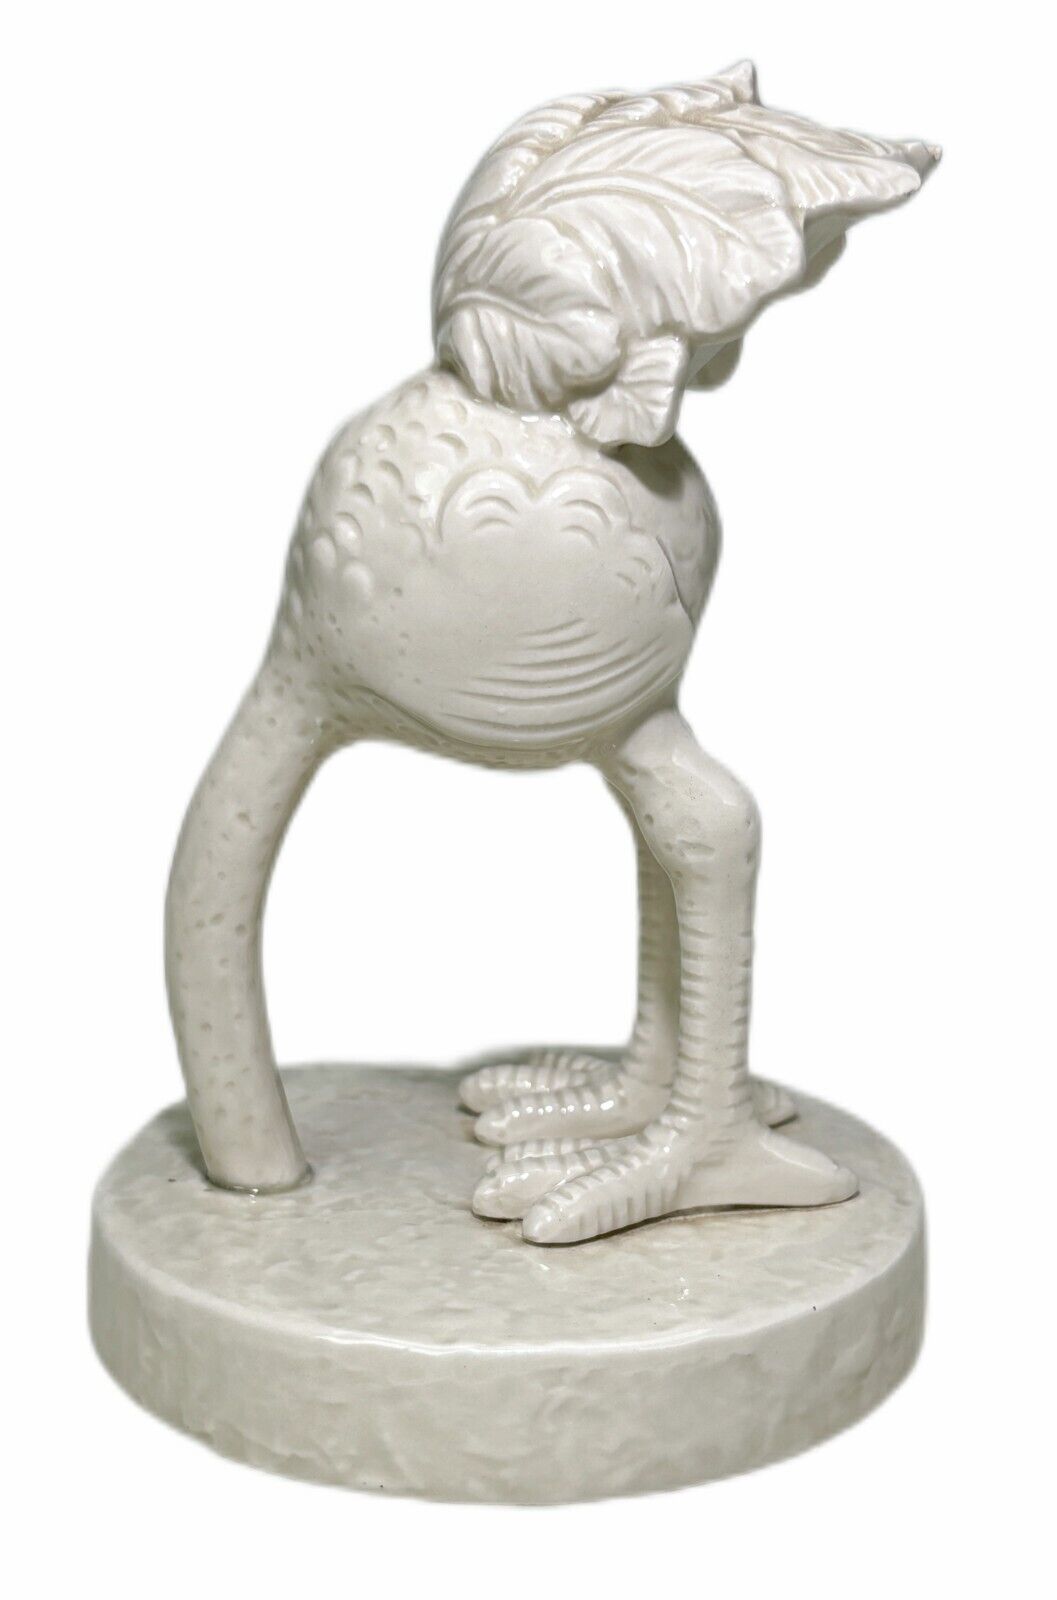 5” Ostrich Head in Sand Fitz Floyd Vtg 70s Figurine Ceramic